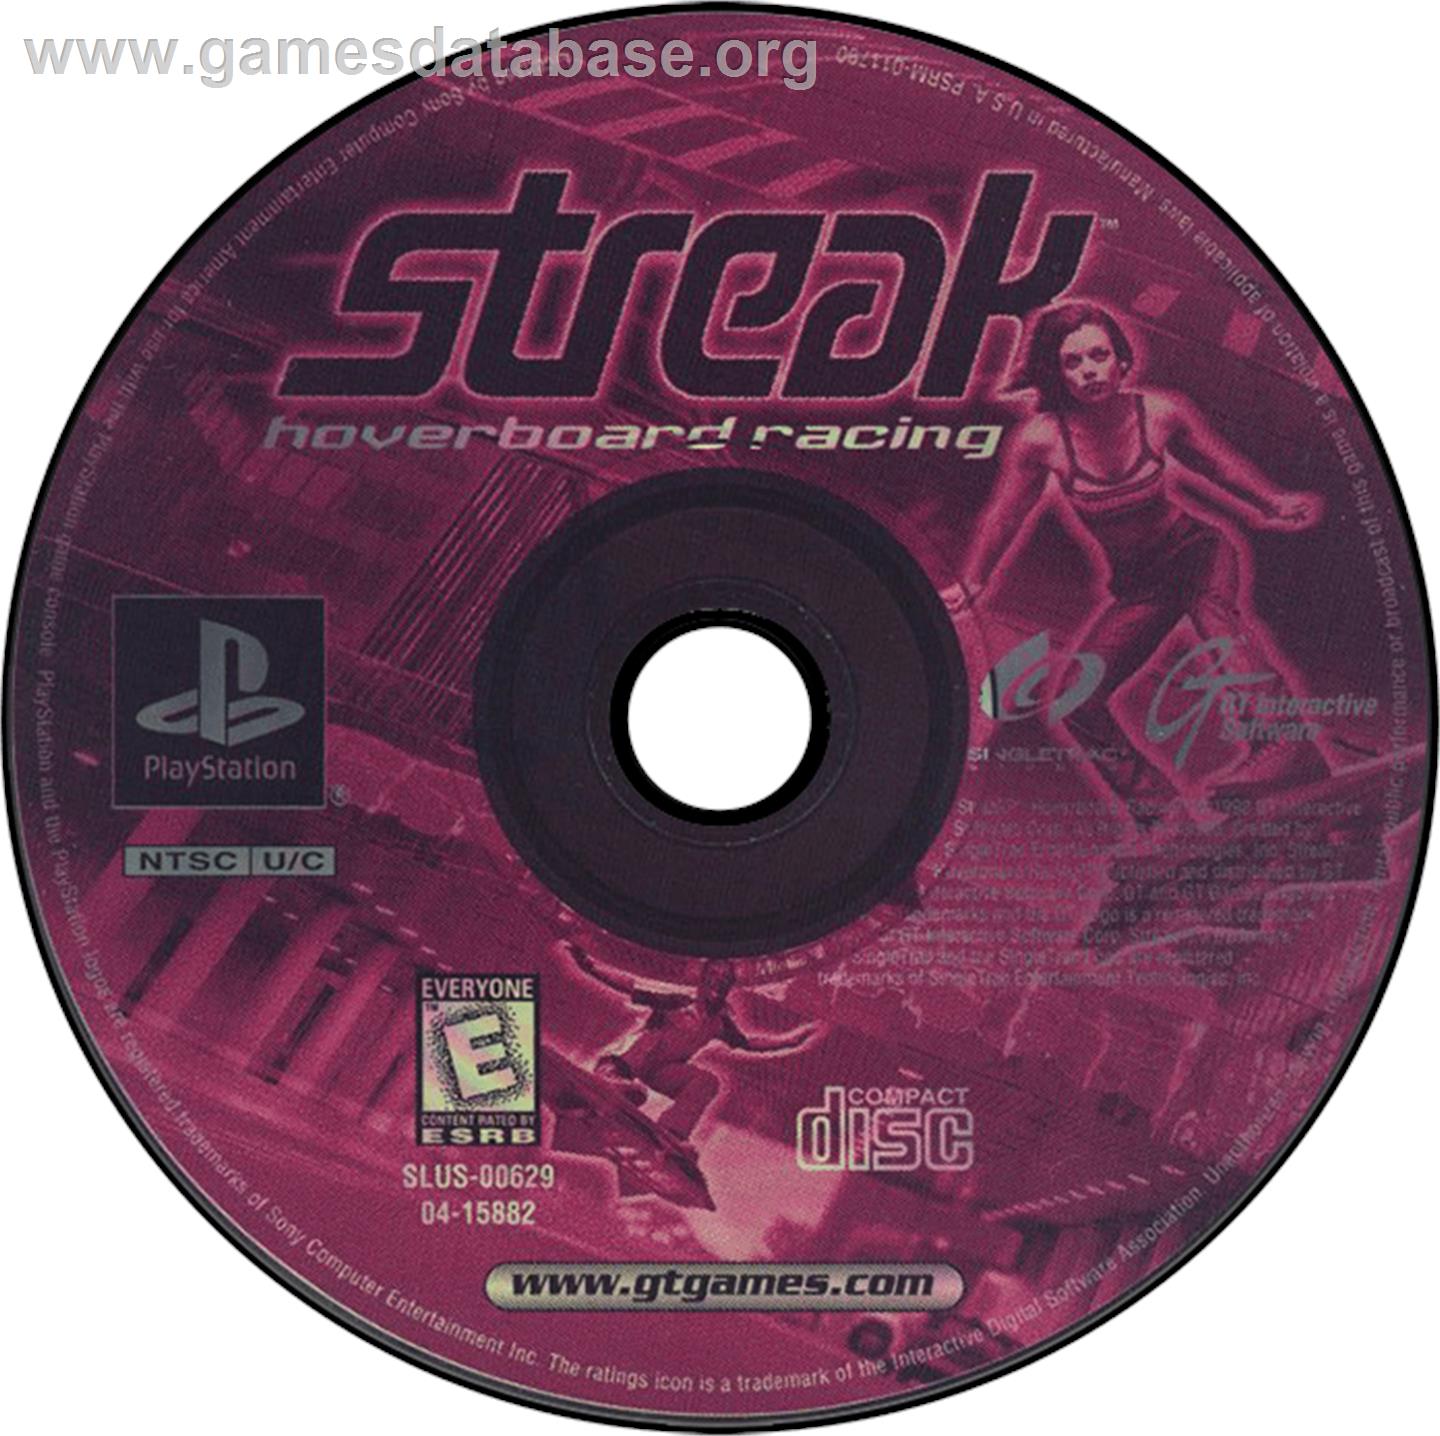 Streak Hoverboard Racing - Sony Playstation - Artwork - Disc